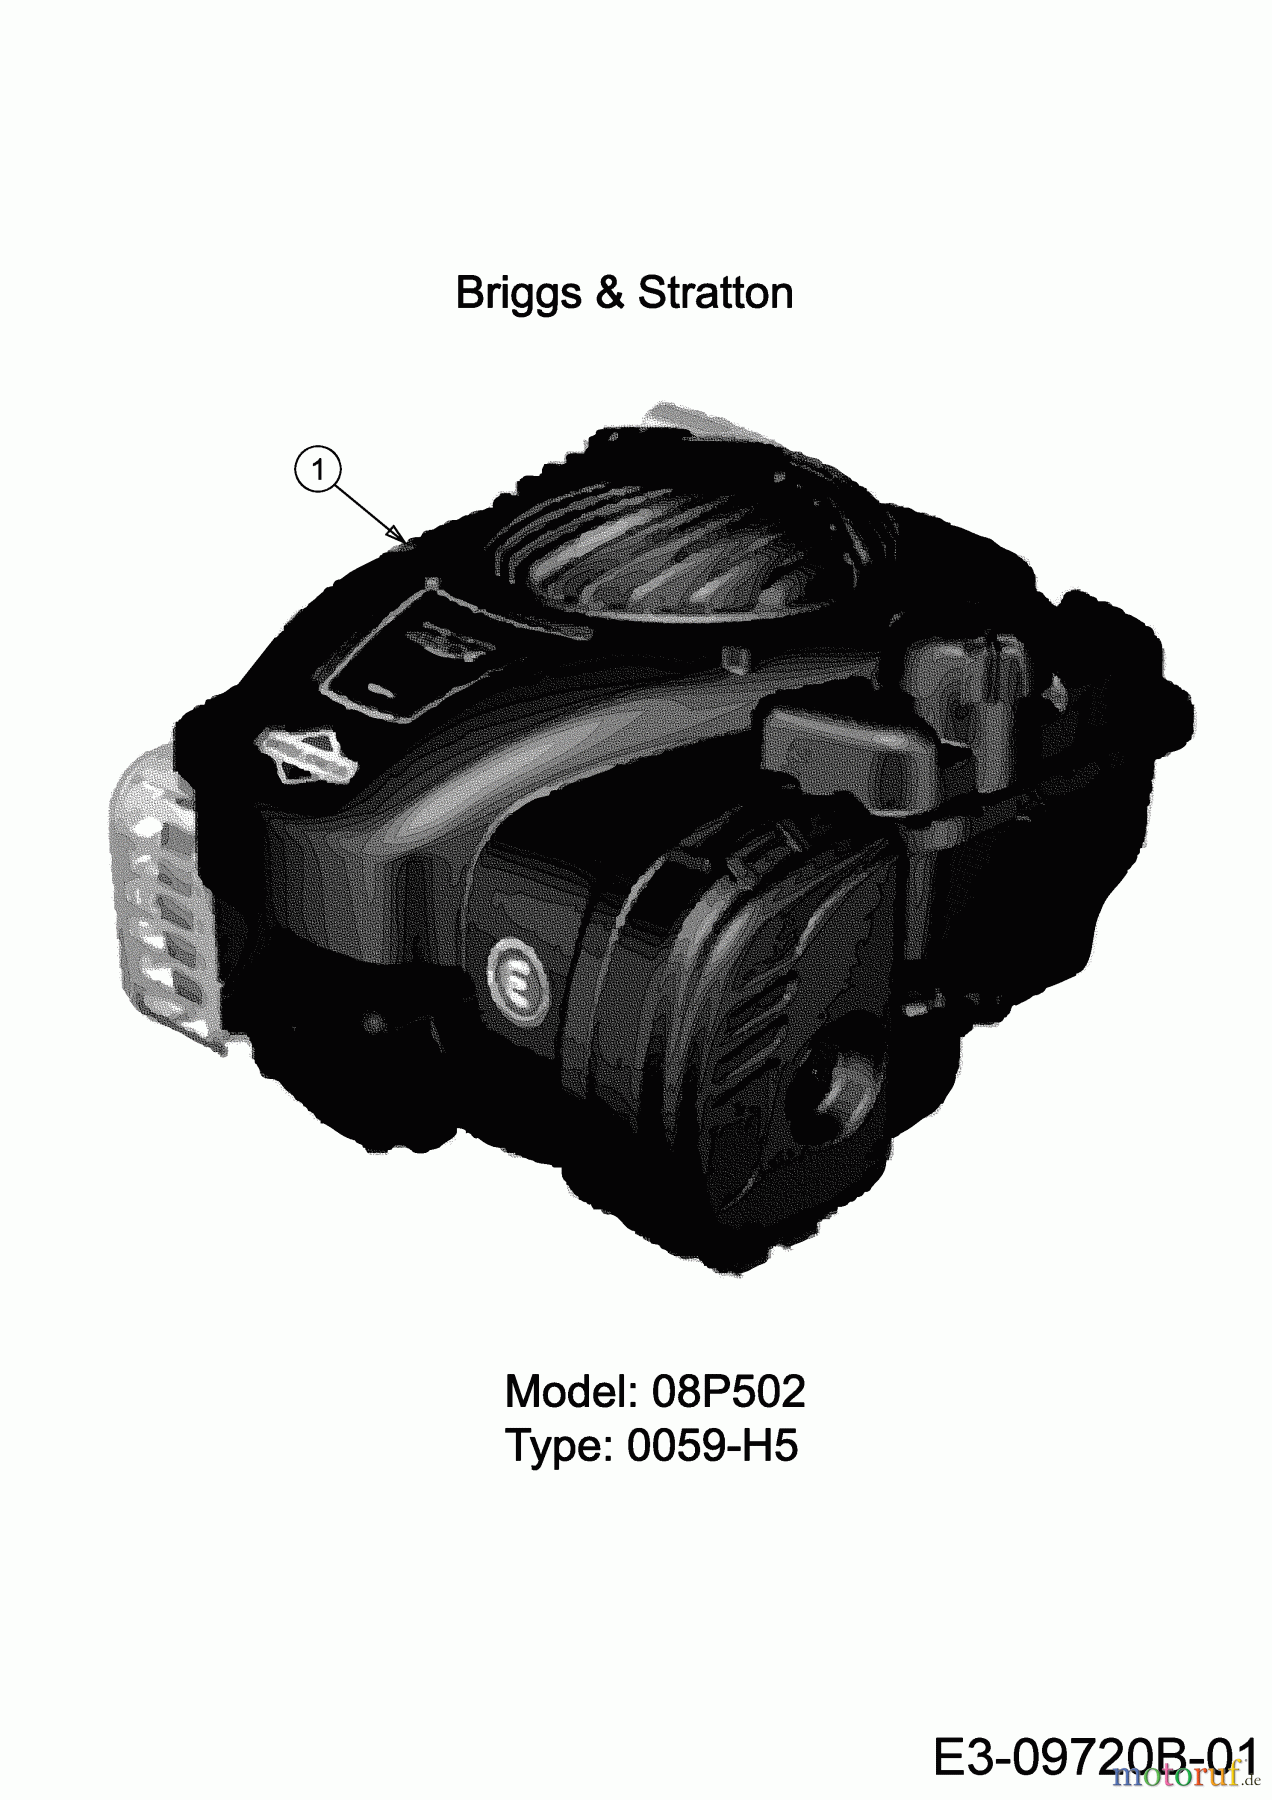  MTD Petrol mower 51 BC 11F-025J600 (2021) Engine Briggs & Stratton